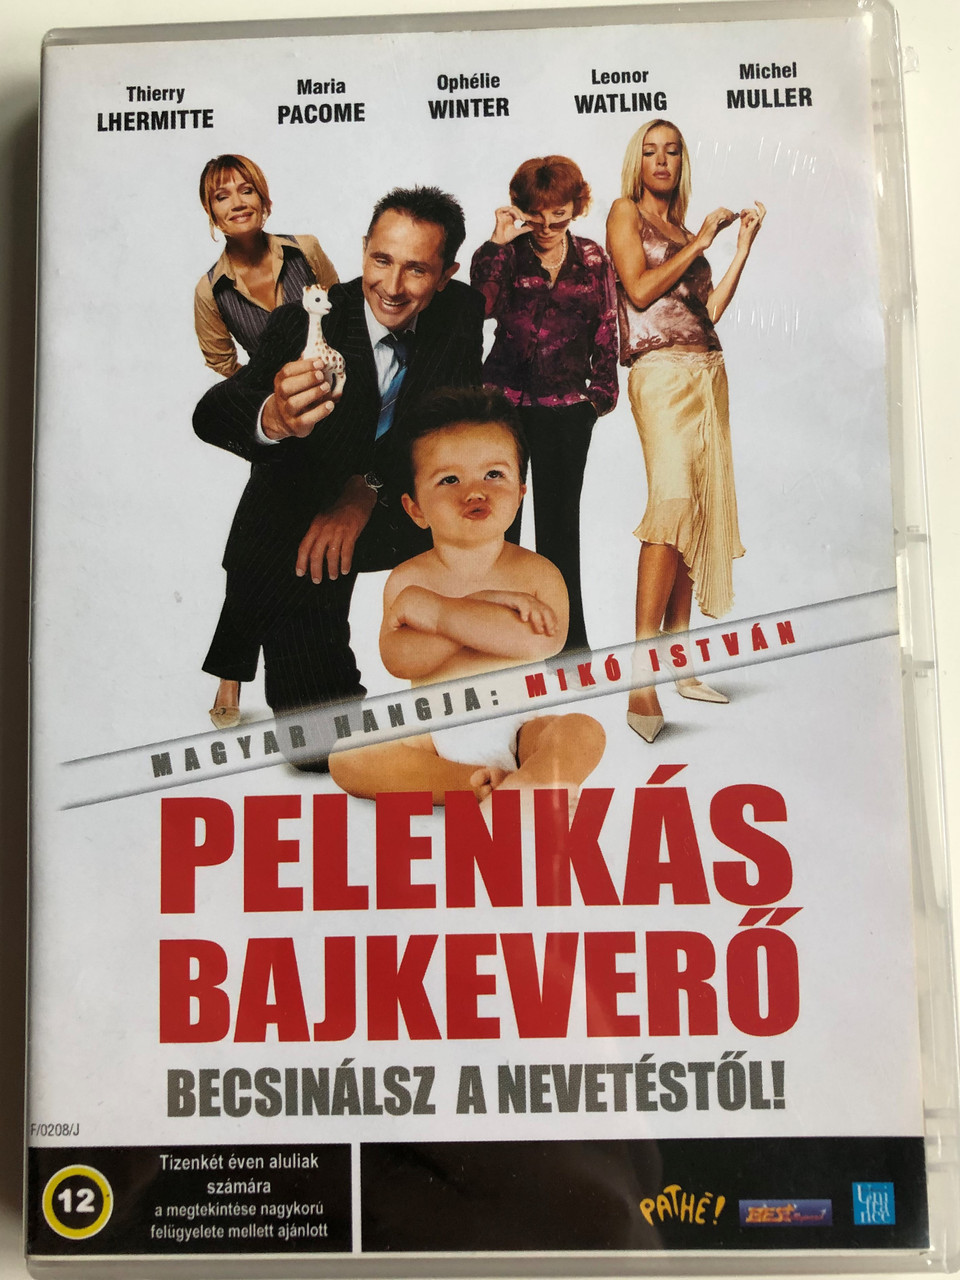 Mauvais Esprit DVD 2003 Pelenkás bajkeverő / Directed by Patrick  Alessandrin / Starring: Thierry Lhermitte, Ophélia Winter, Maria Pacome,  Leonor Watling - bibleinmylanguage